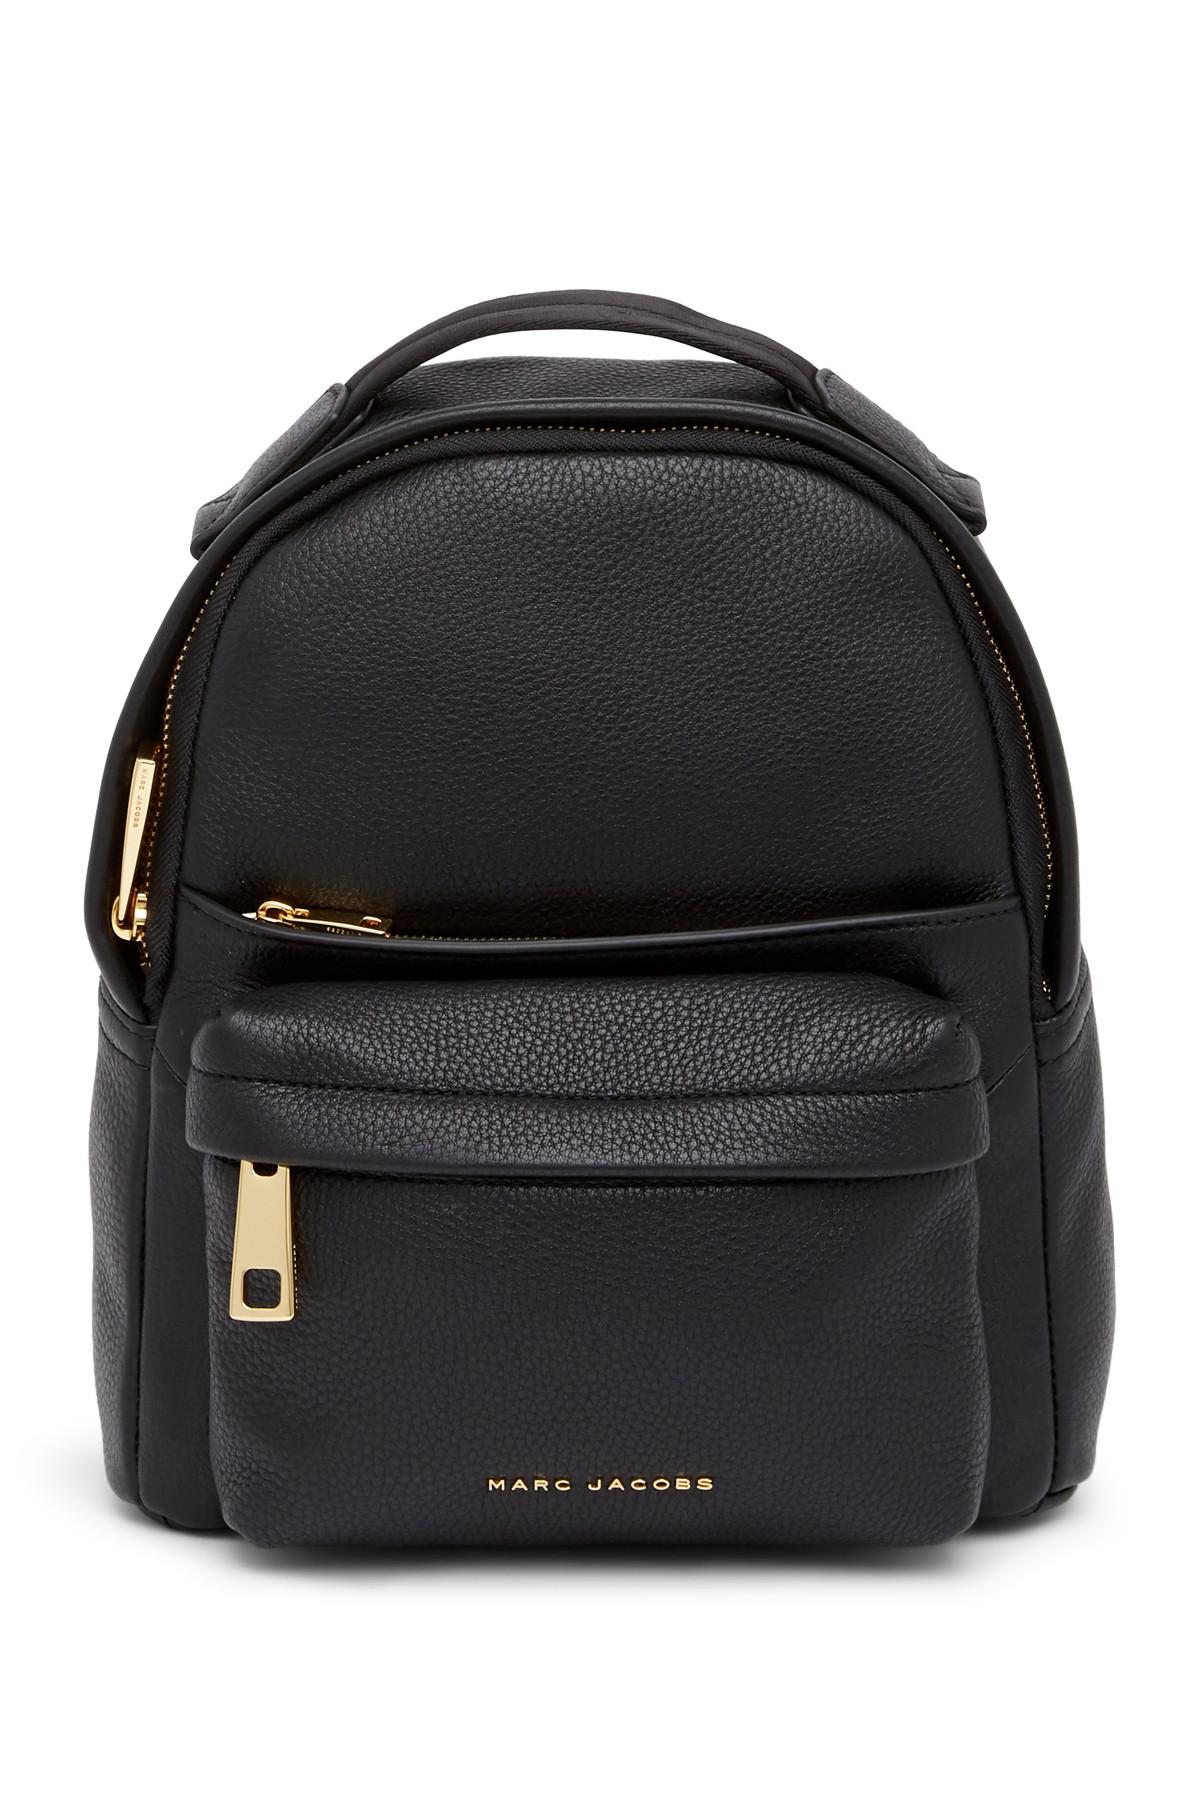 Marc Jacobs Mini Black Pebbled Leather Backpack